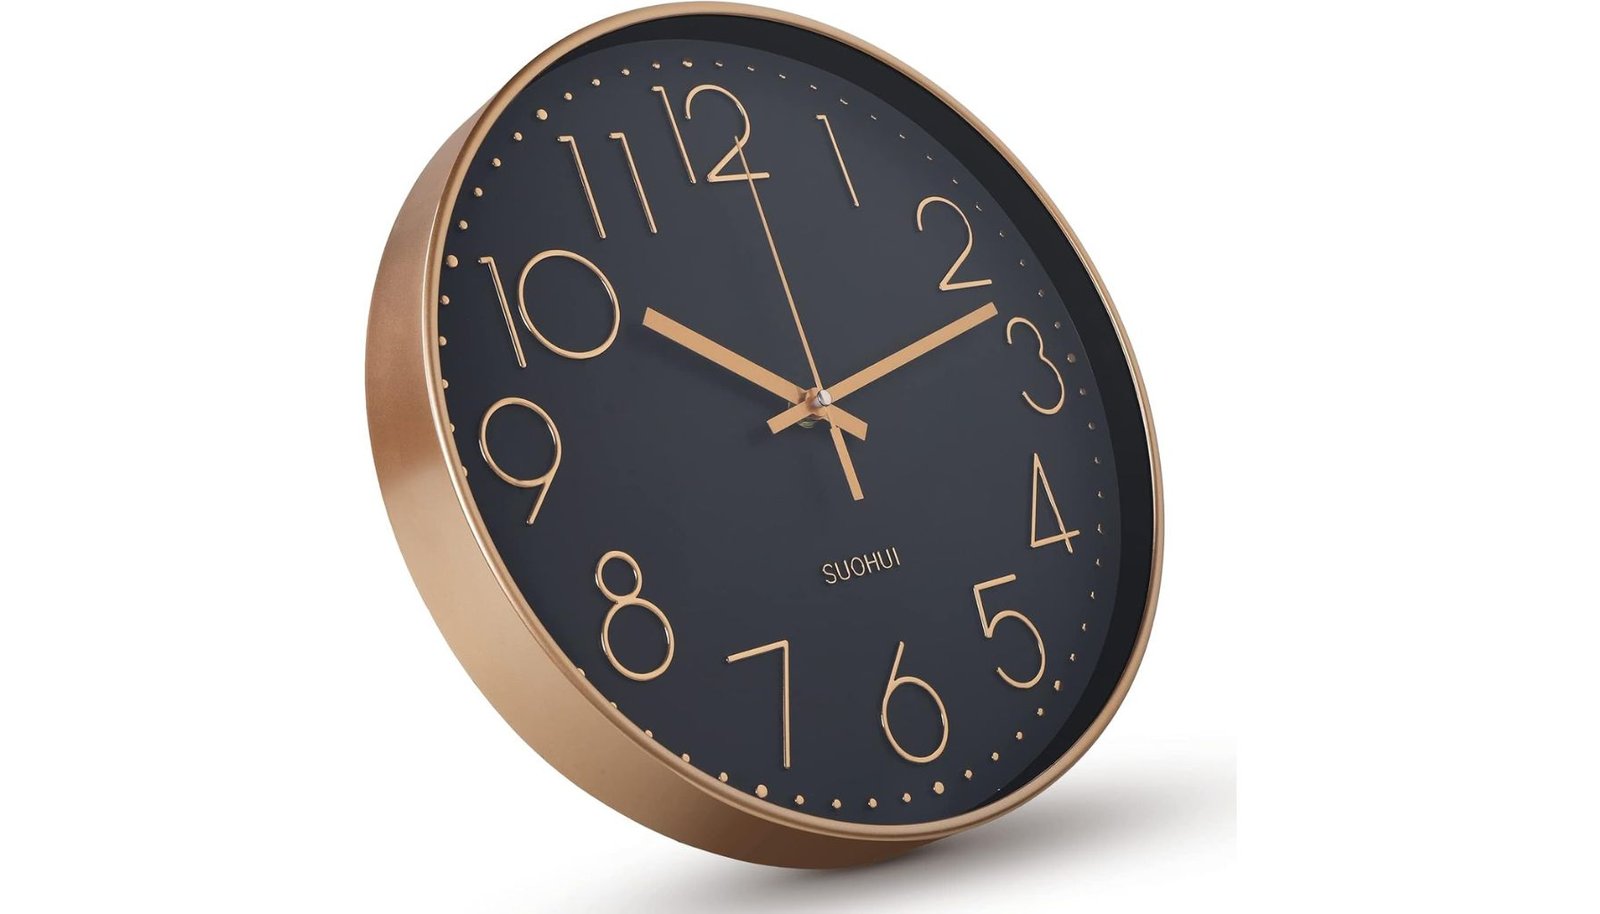 SUOHUI Silent 12 Inch Golden Frame Black Dial Modern Wall Clock Review